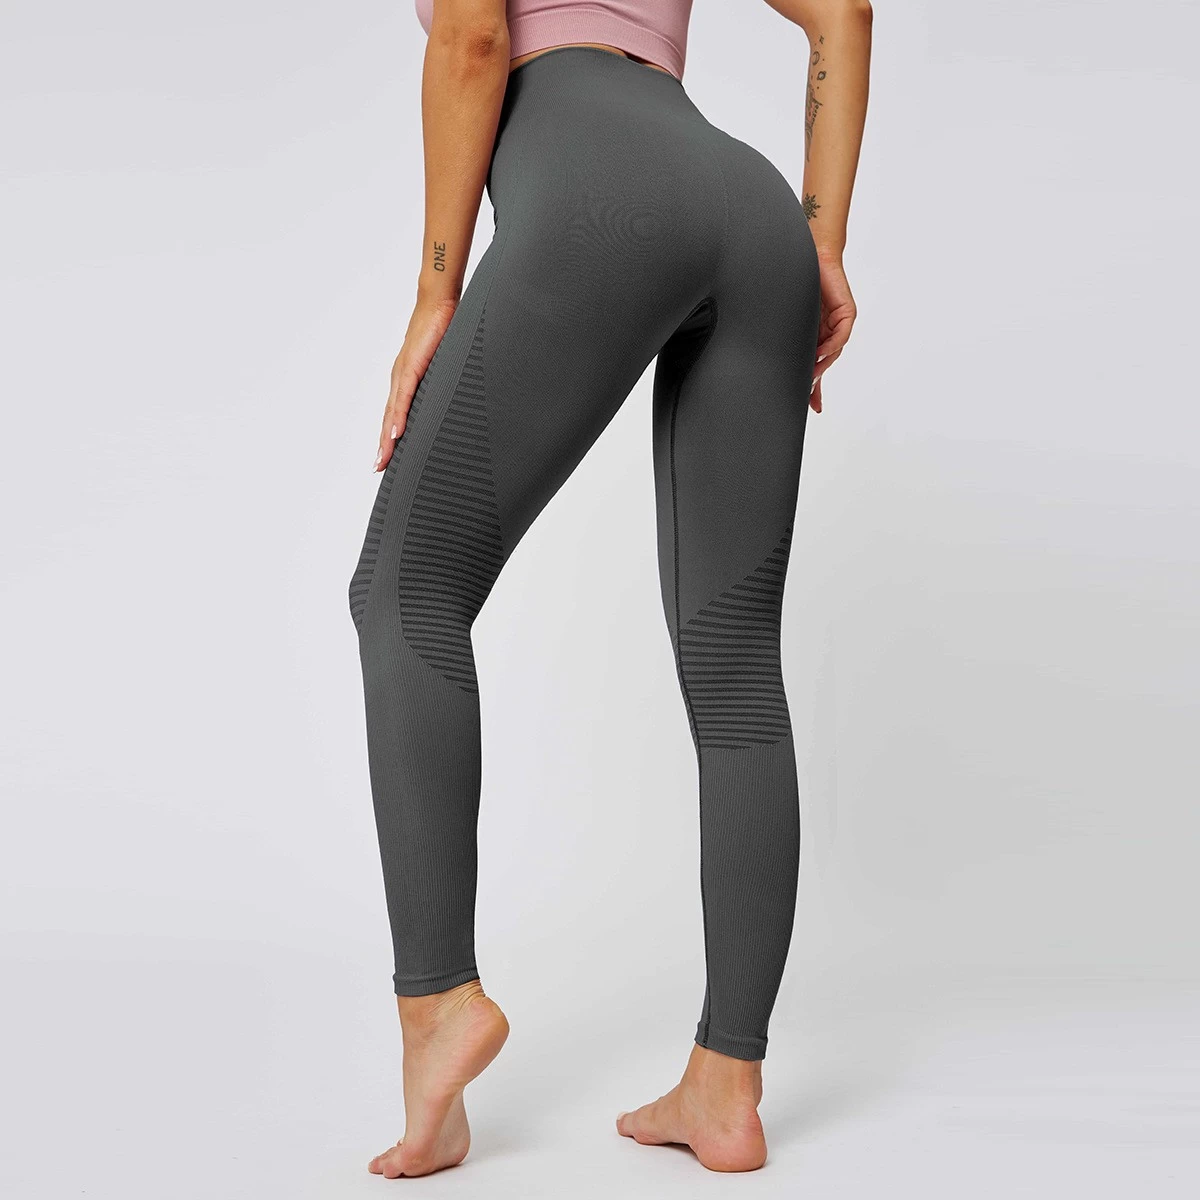 S-SHAPER Women Seamless Leggings High-quality Fabrics High Waist Quick drying Workout Gym Yoga Pants Manufacturer